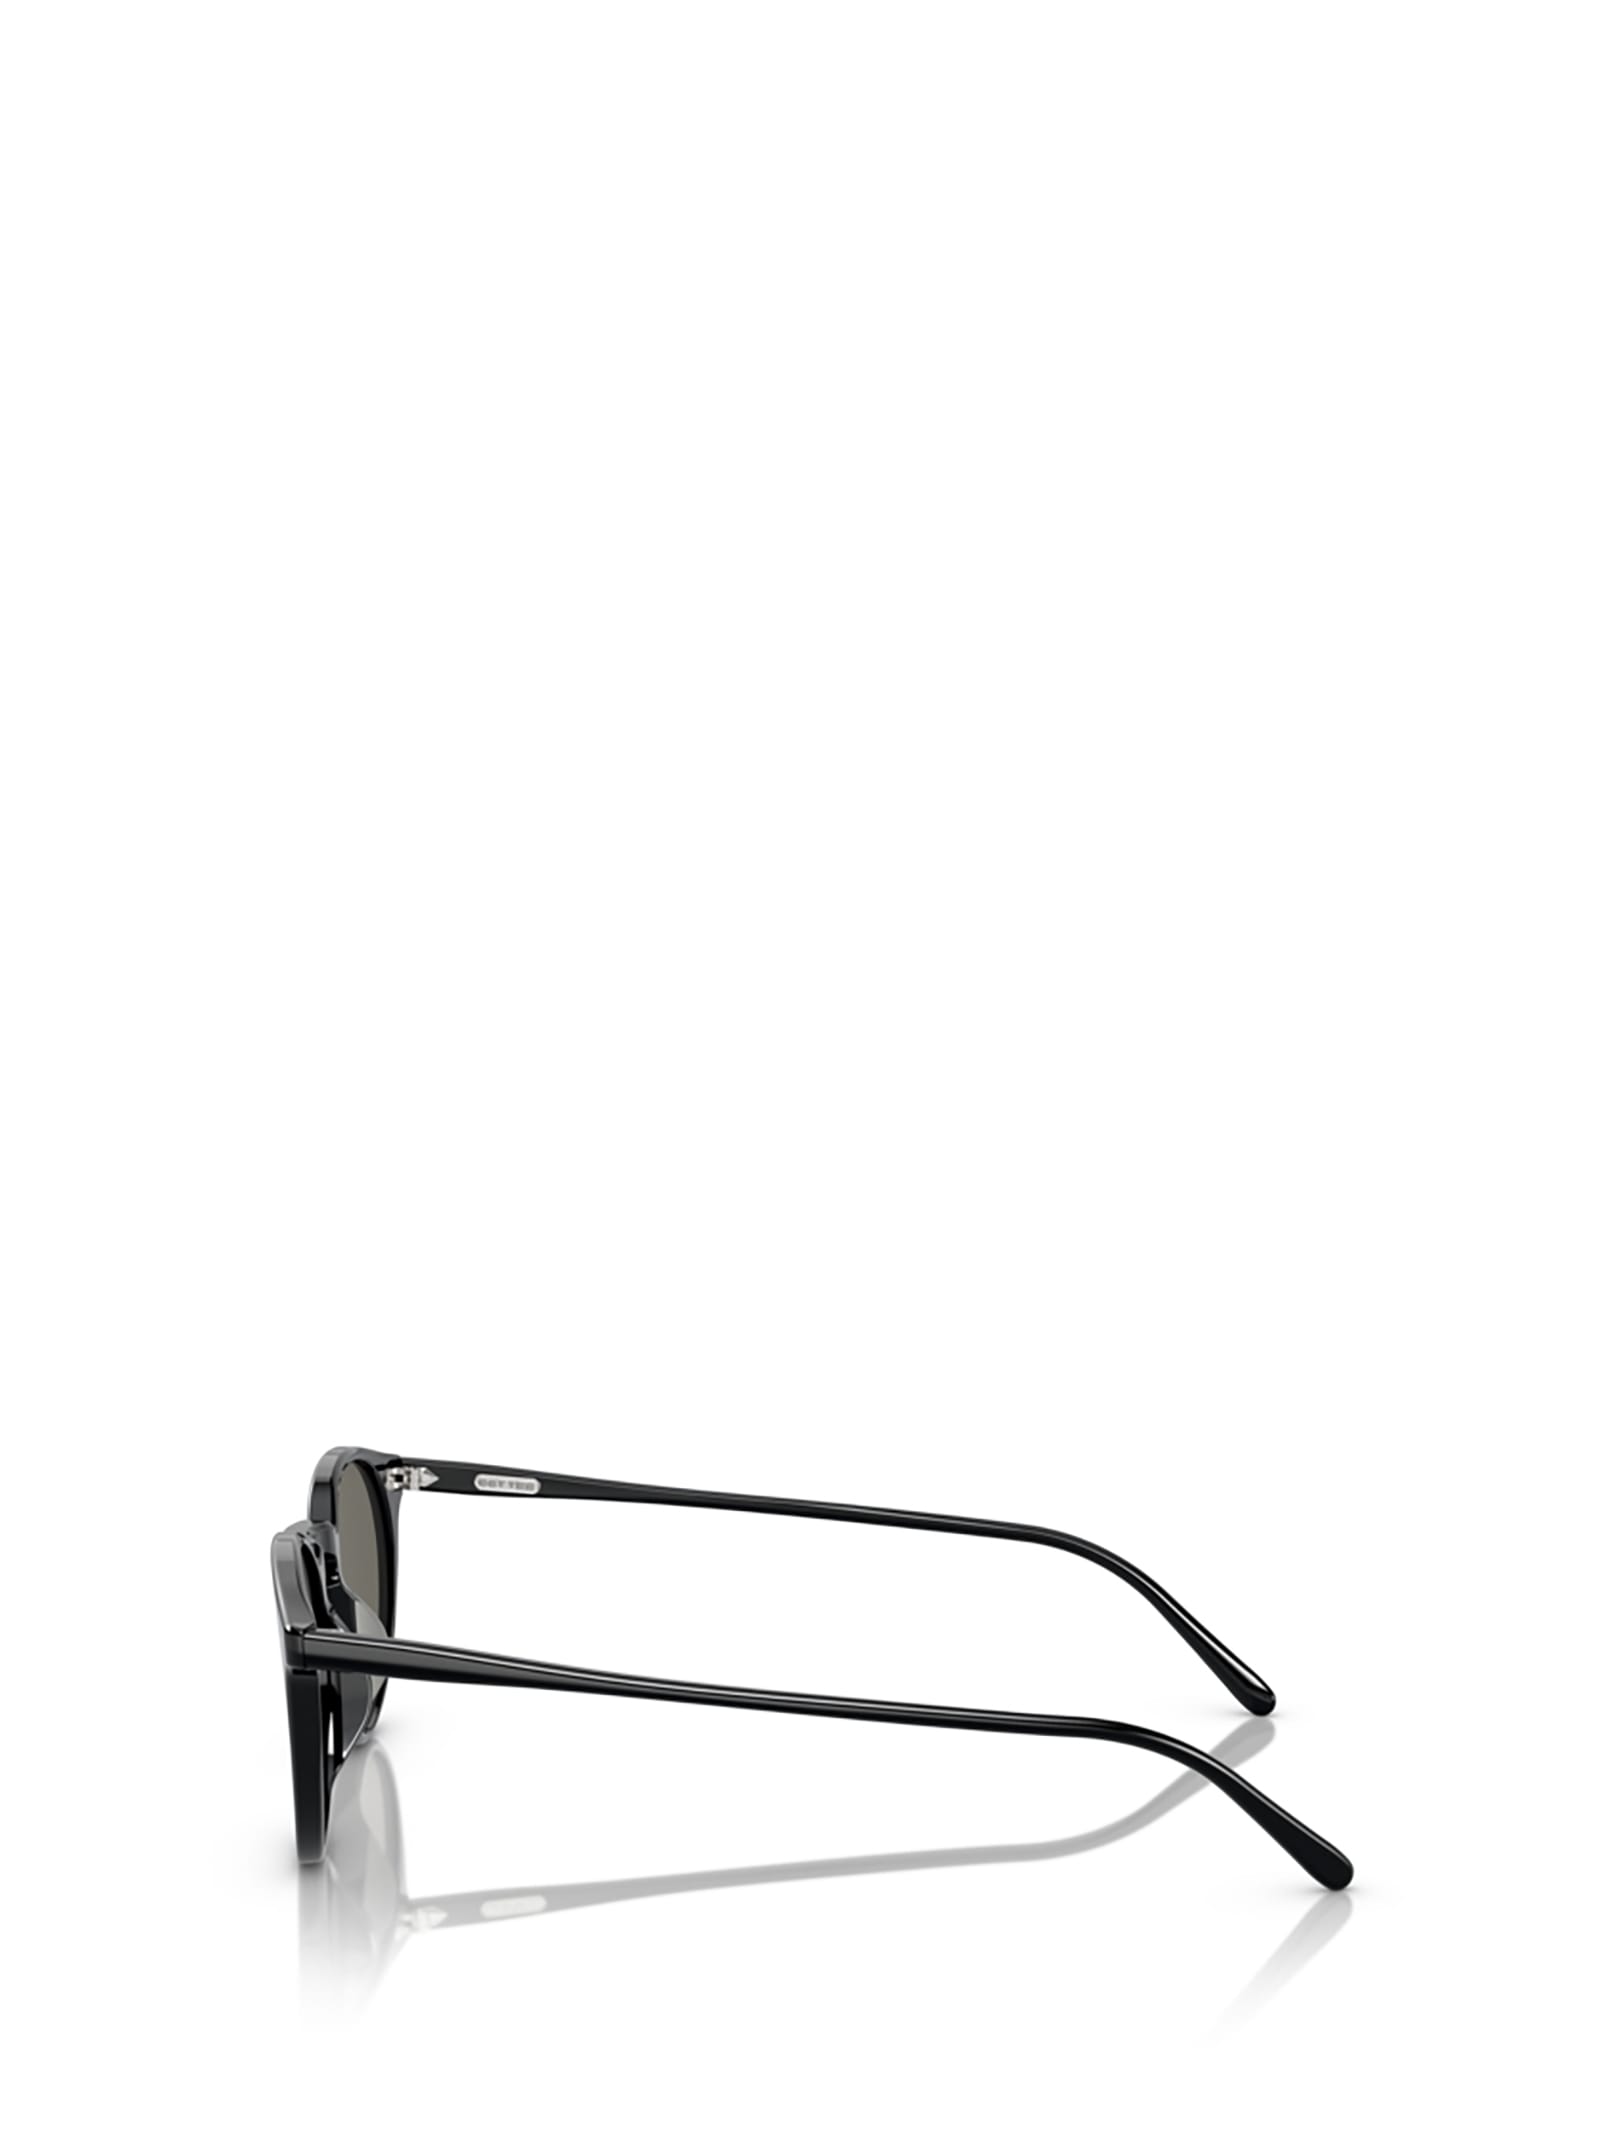 Shop Oliver Peoples Ov5529su Black Sunglasses